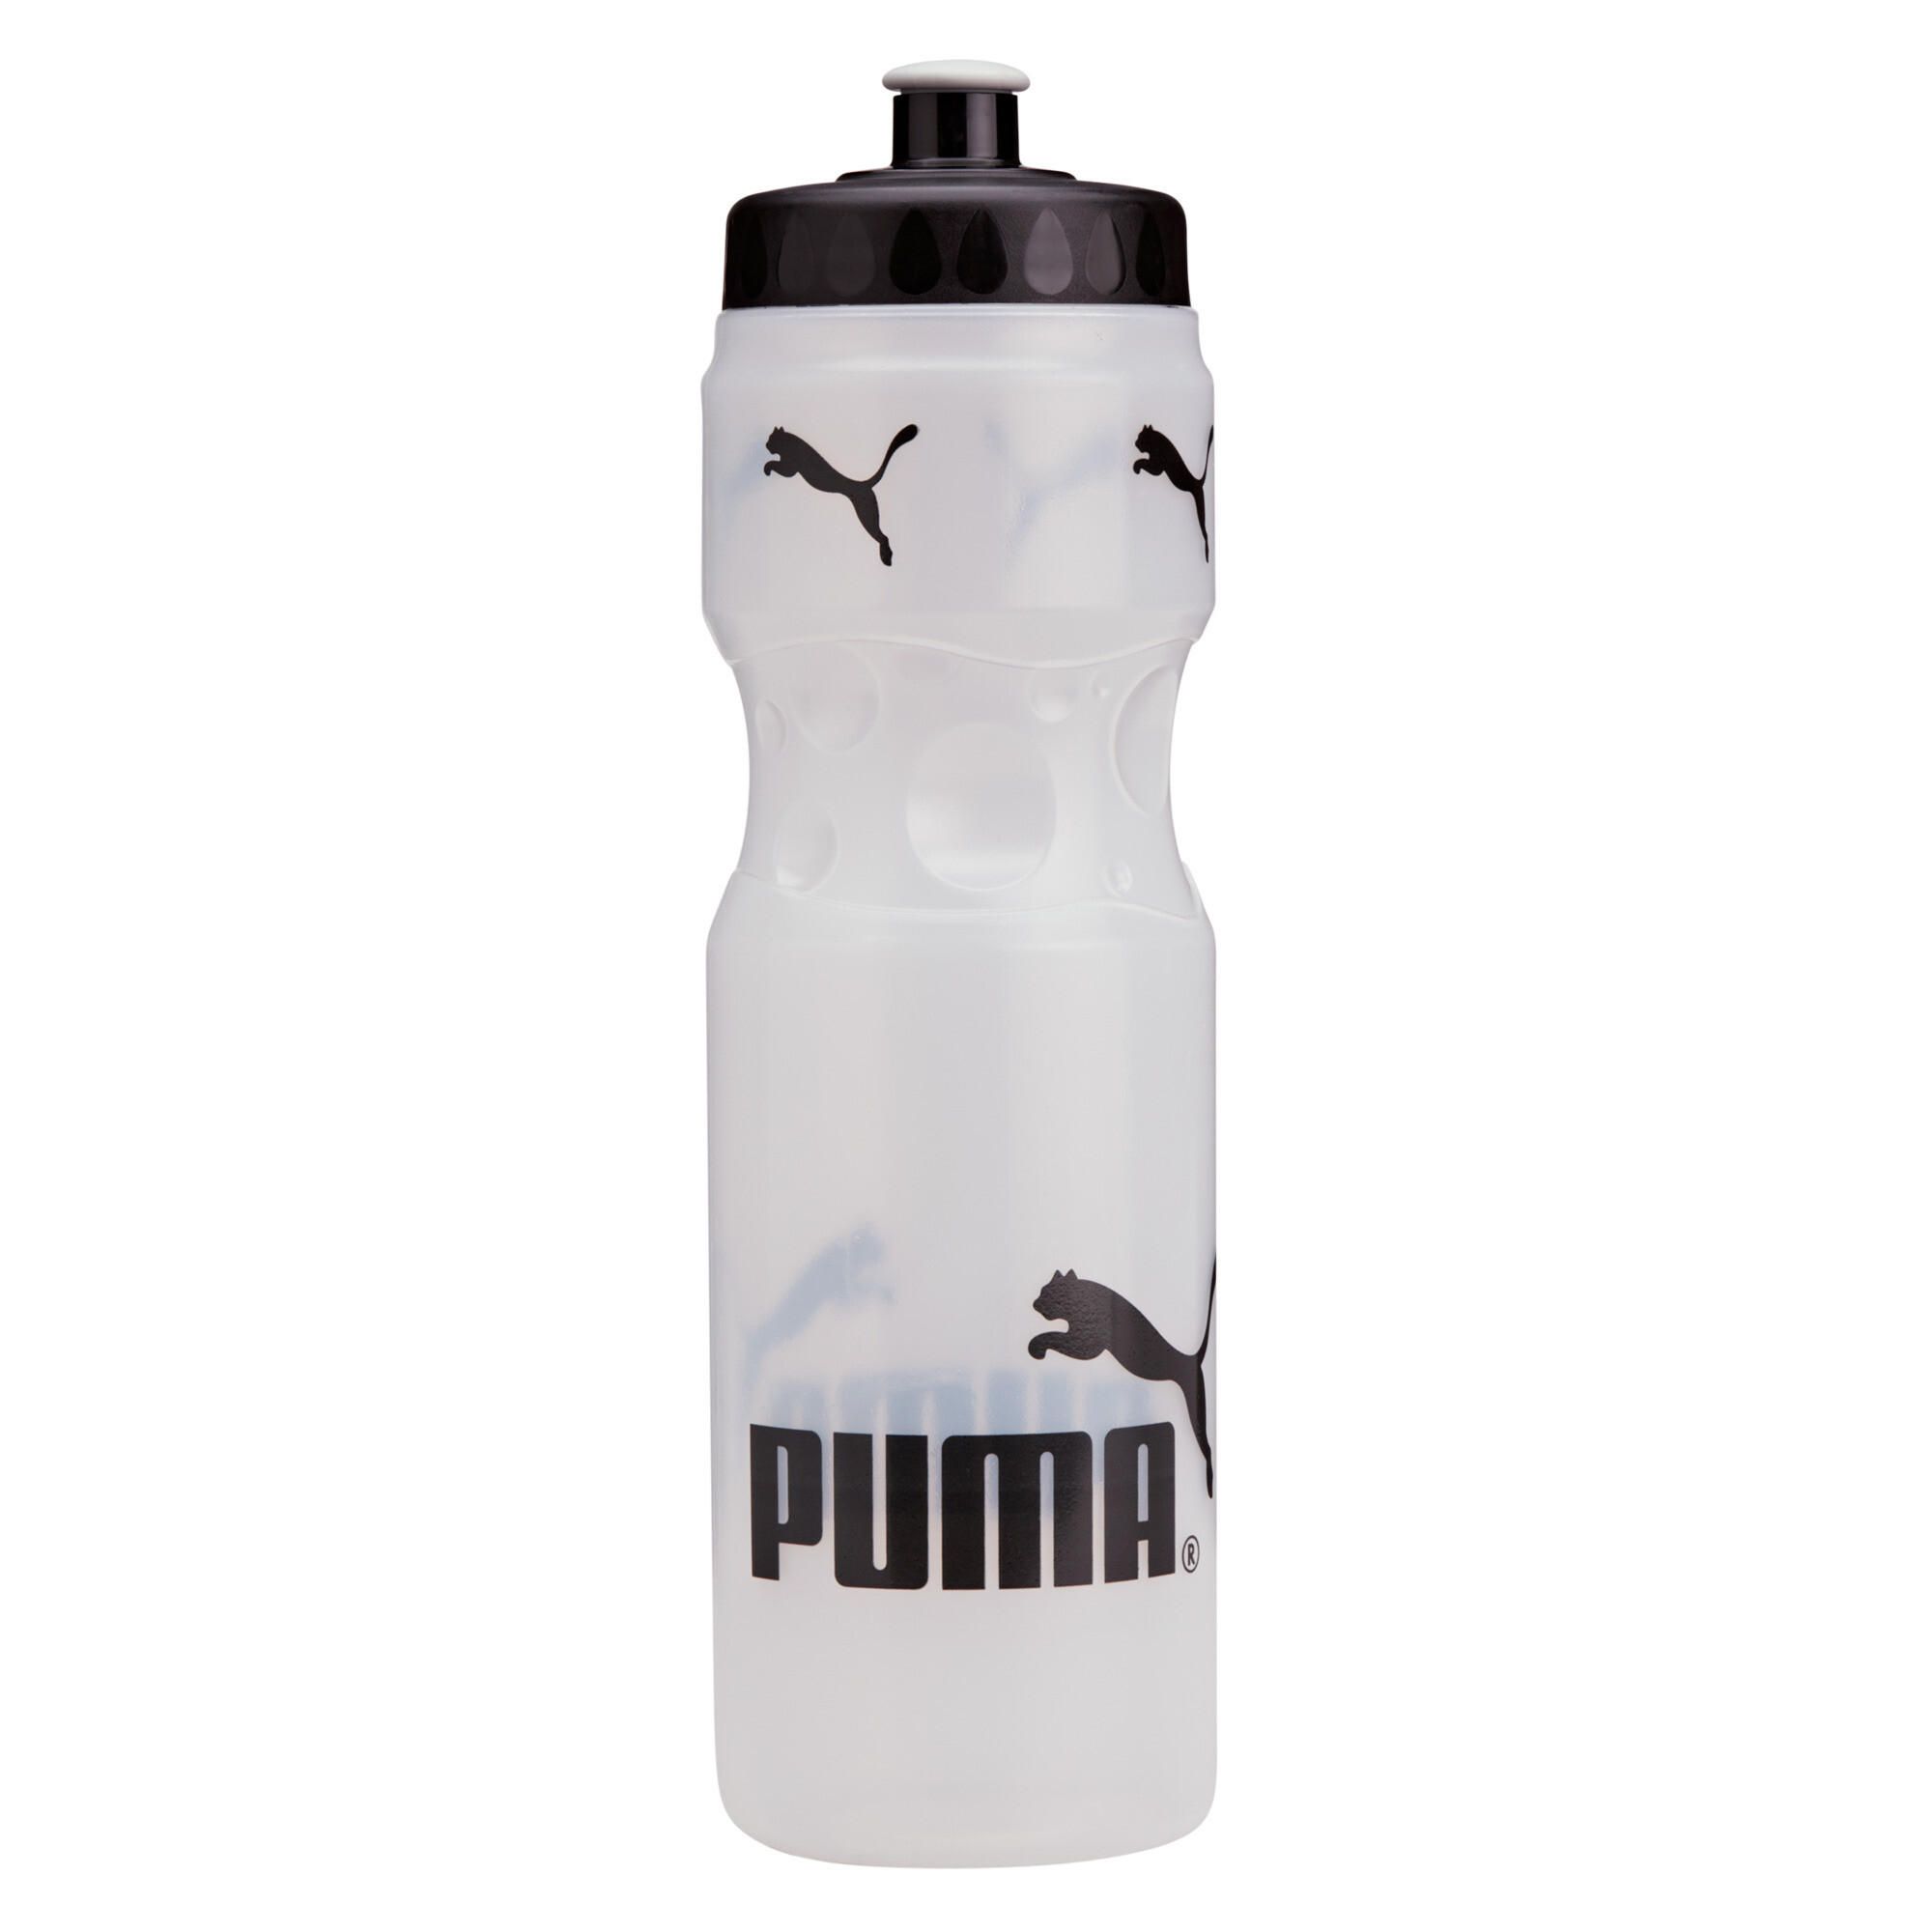 puma bottles online